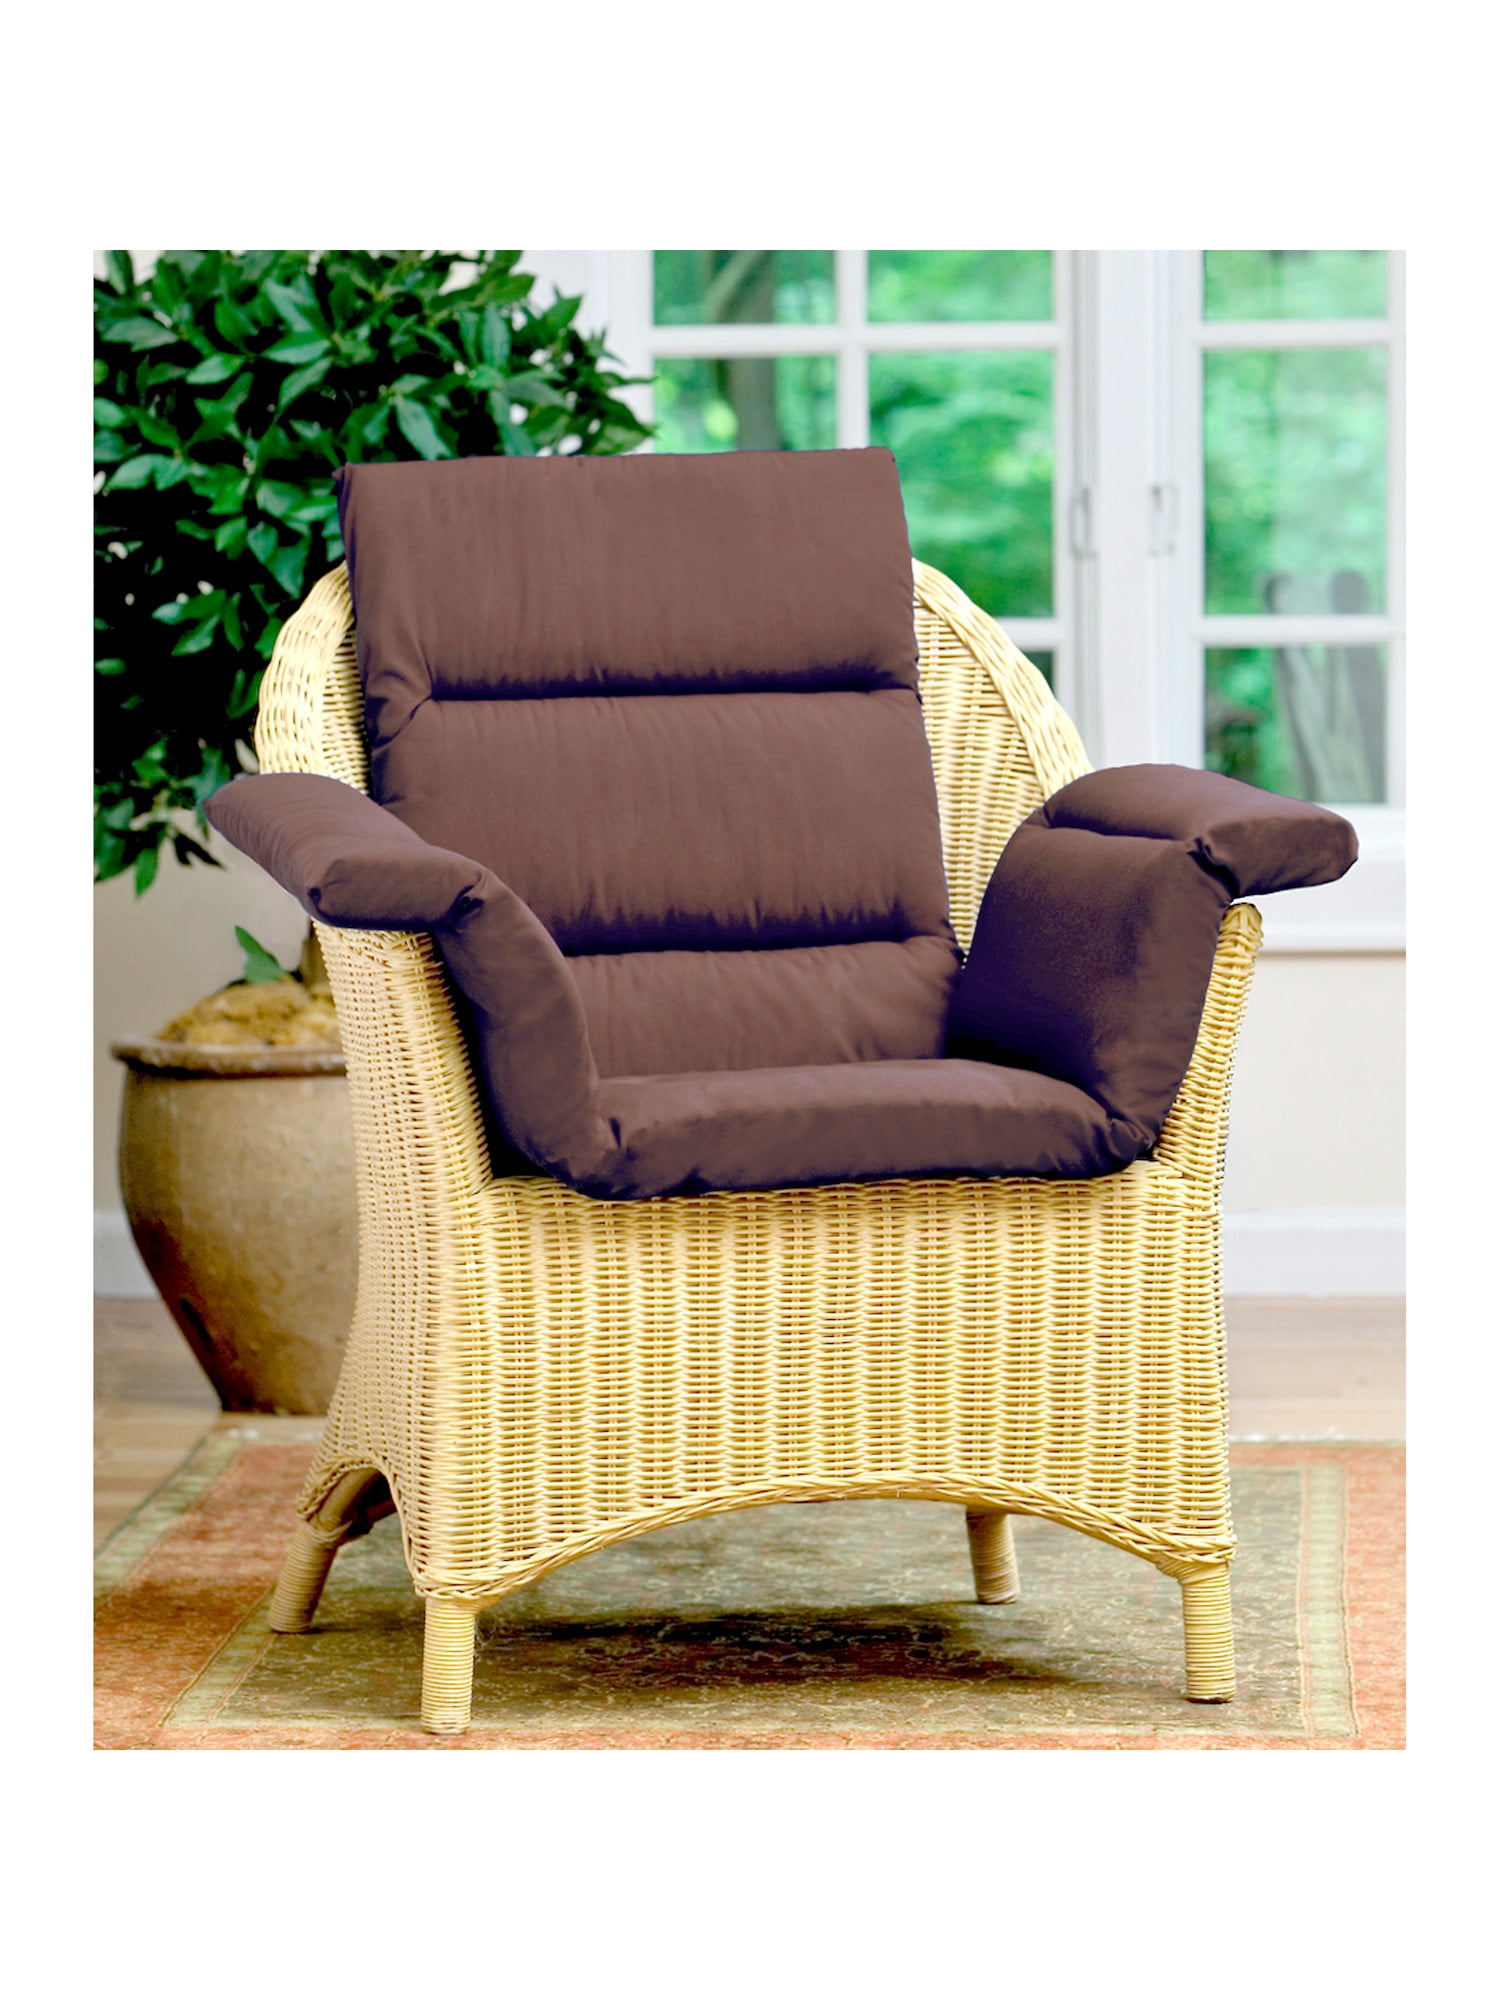 Pressure Reducing Chair Cushion, Plaid – Wheelchair, Armchair, Patio Chair  Cushion – Generous Sized, Washable, Polyester/Cotton Surface